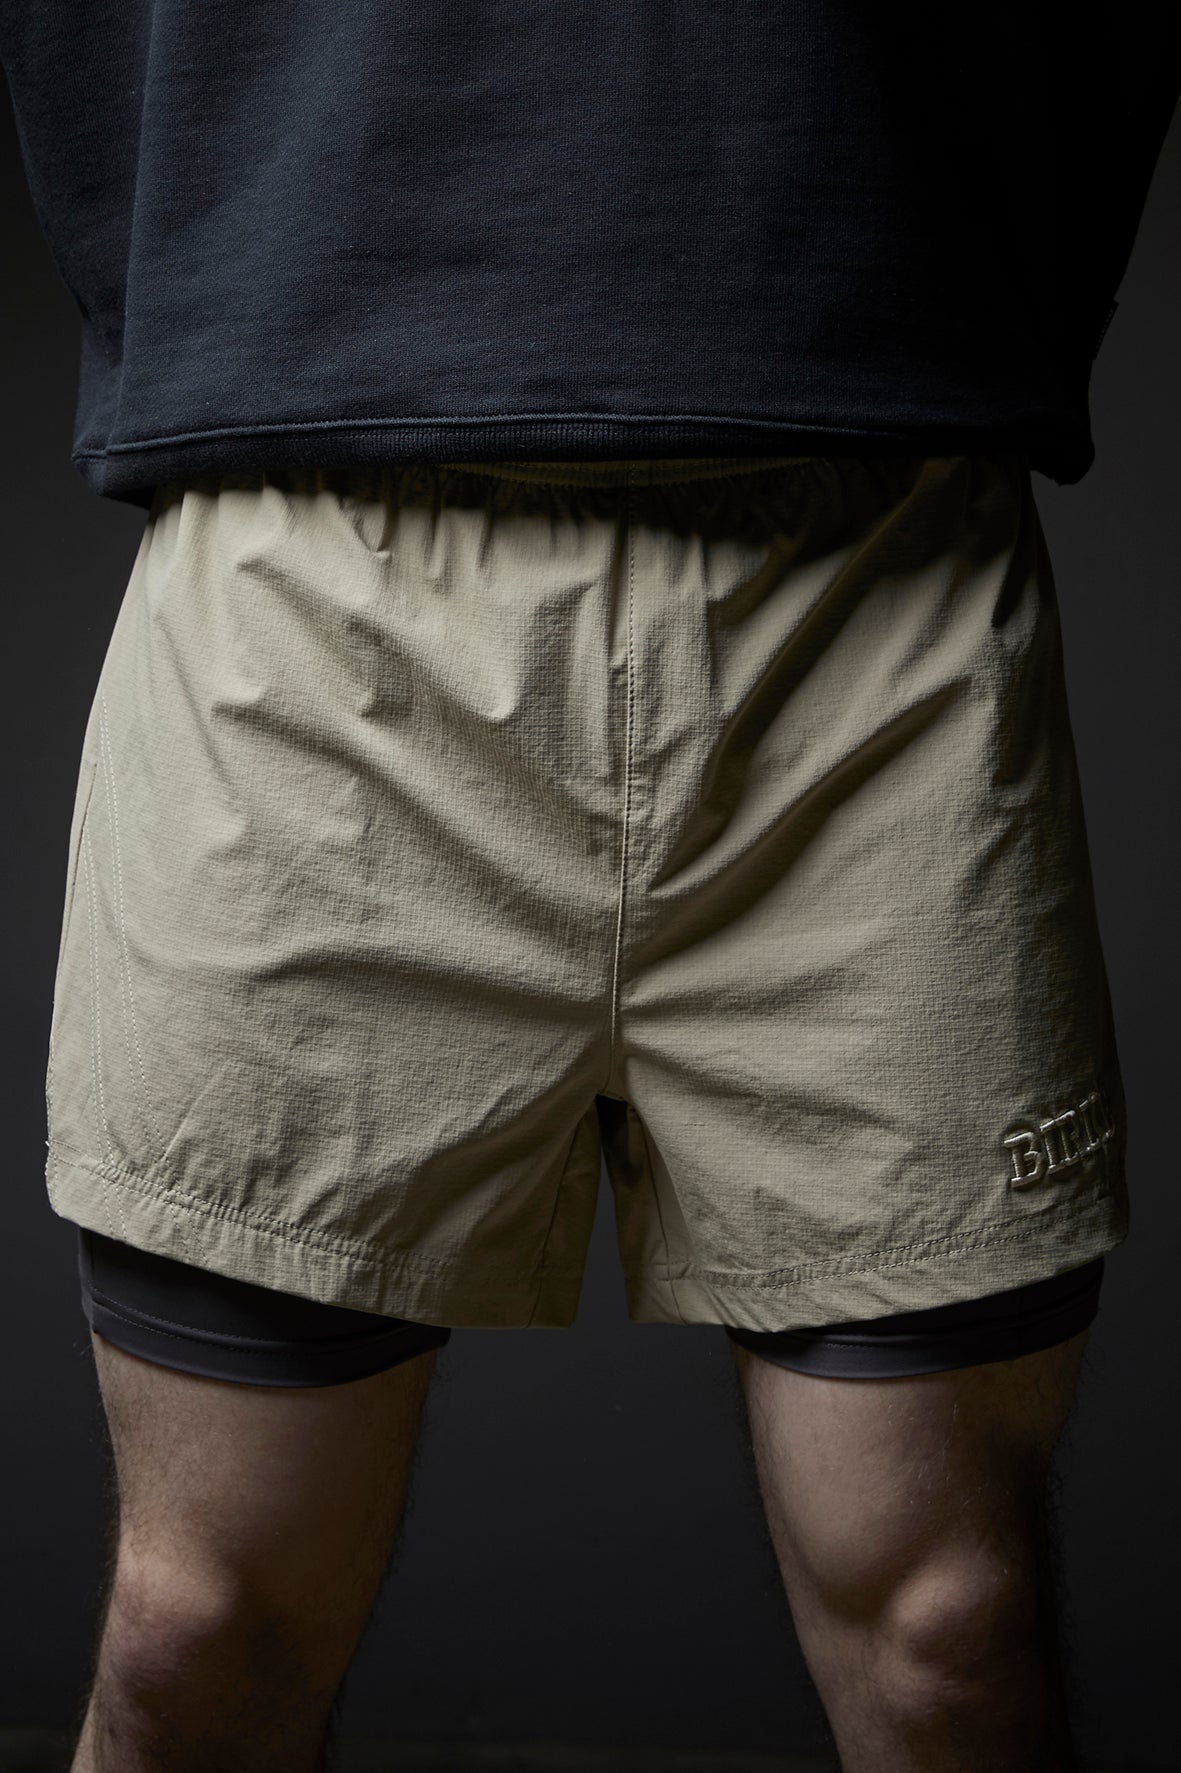 DIVISION 2 in 1 shorts,  5" DESERT